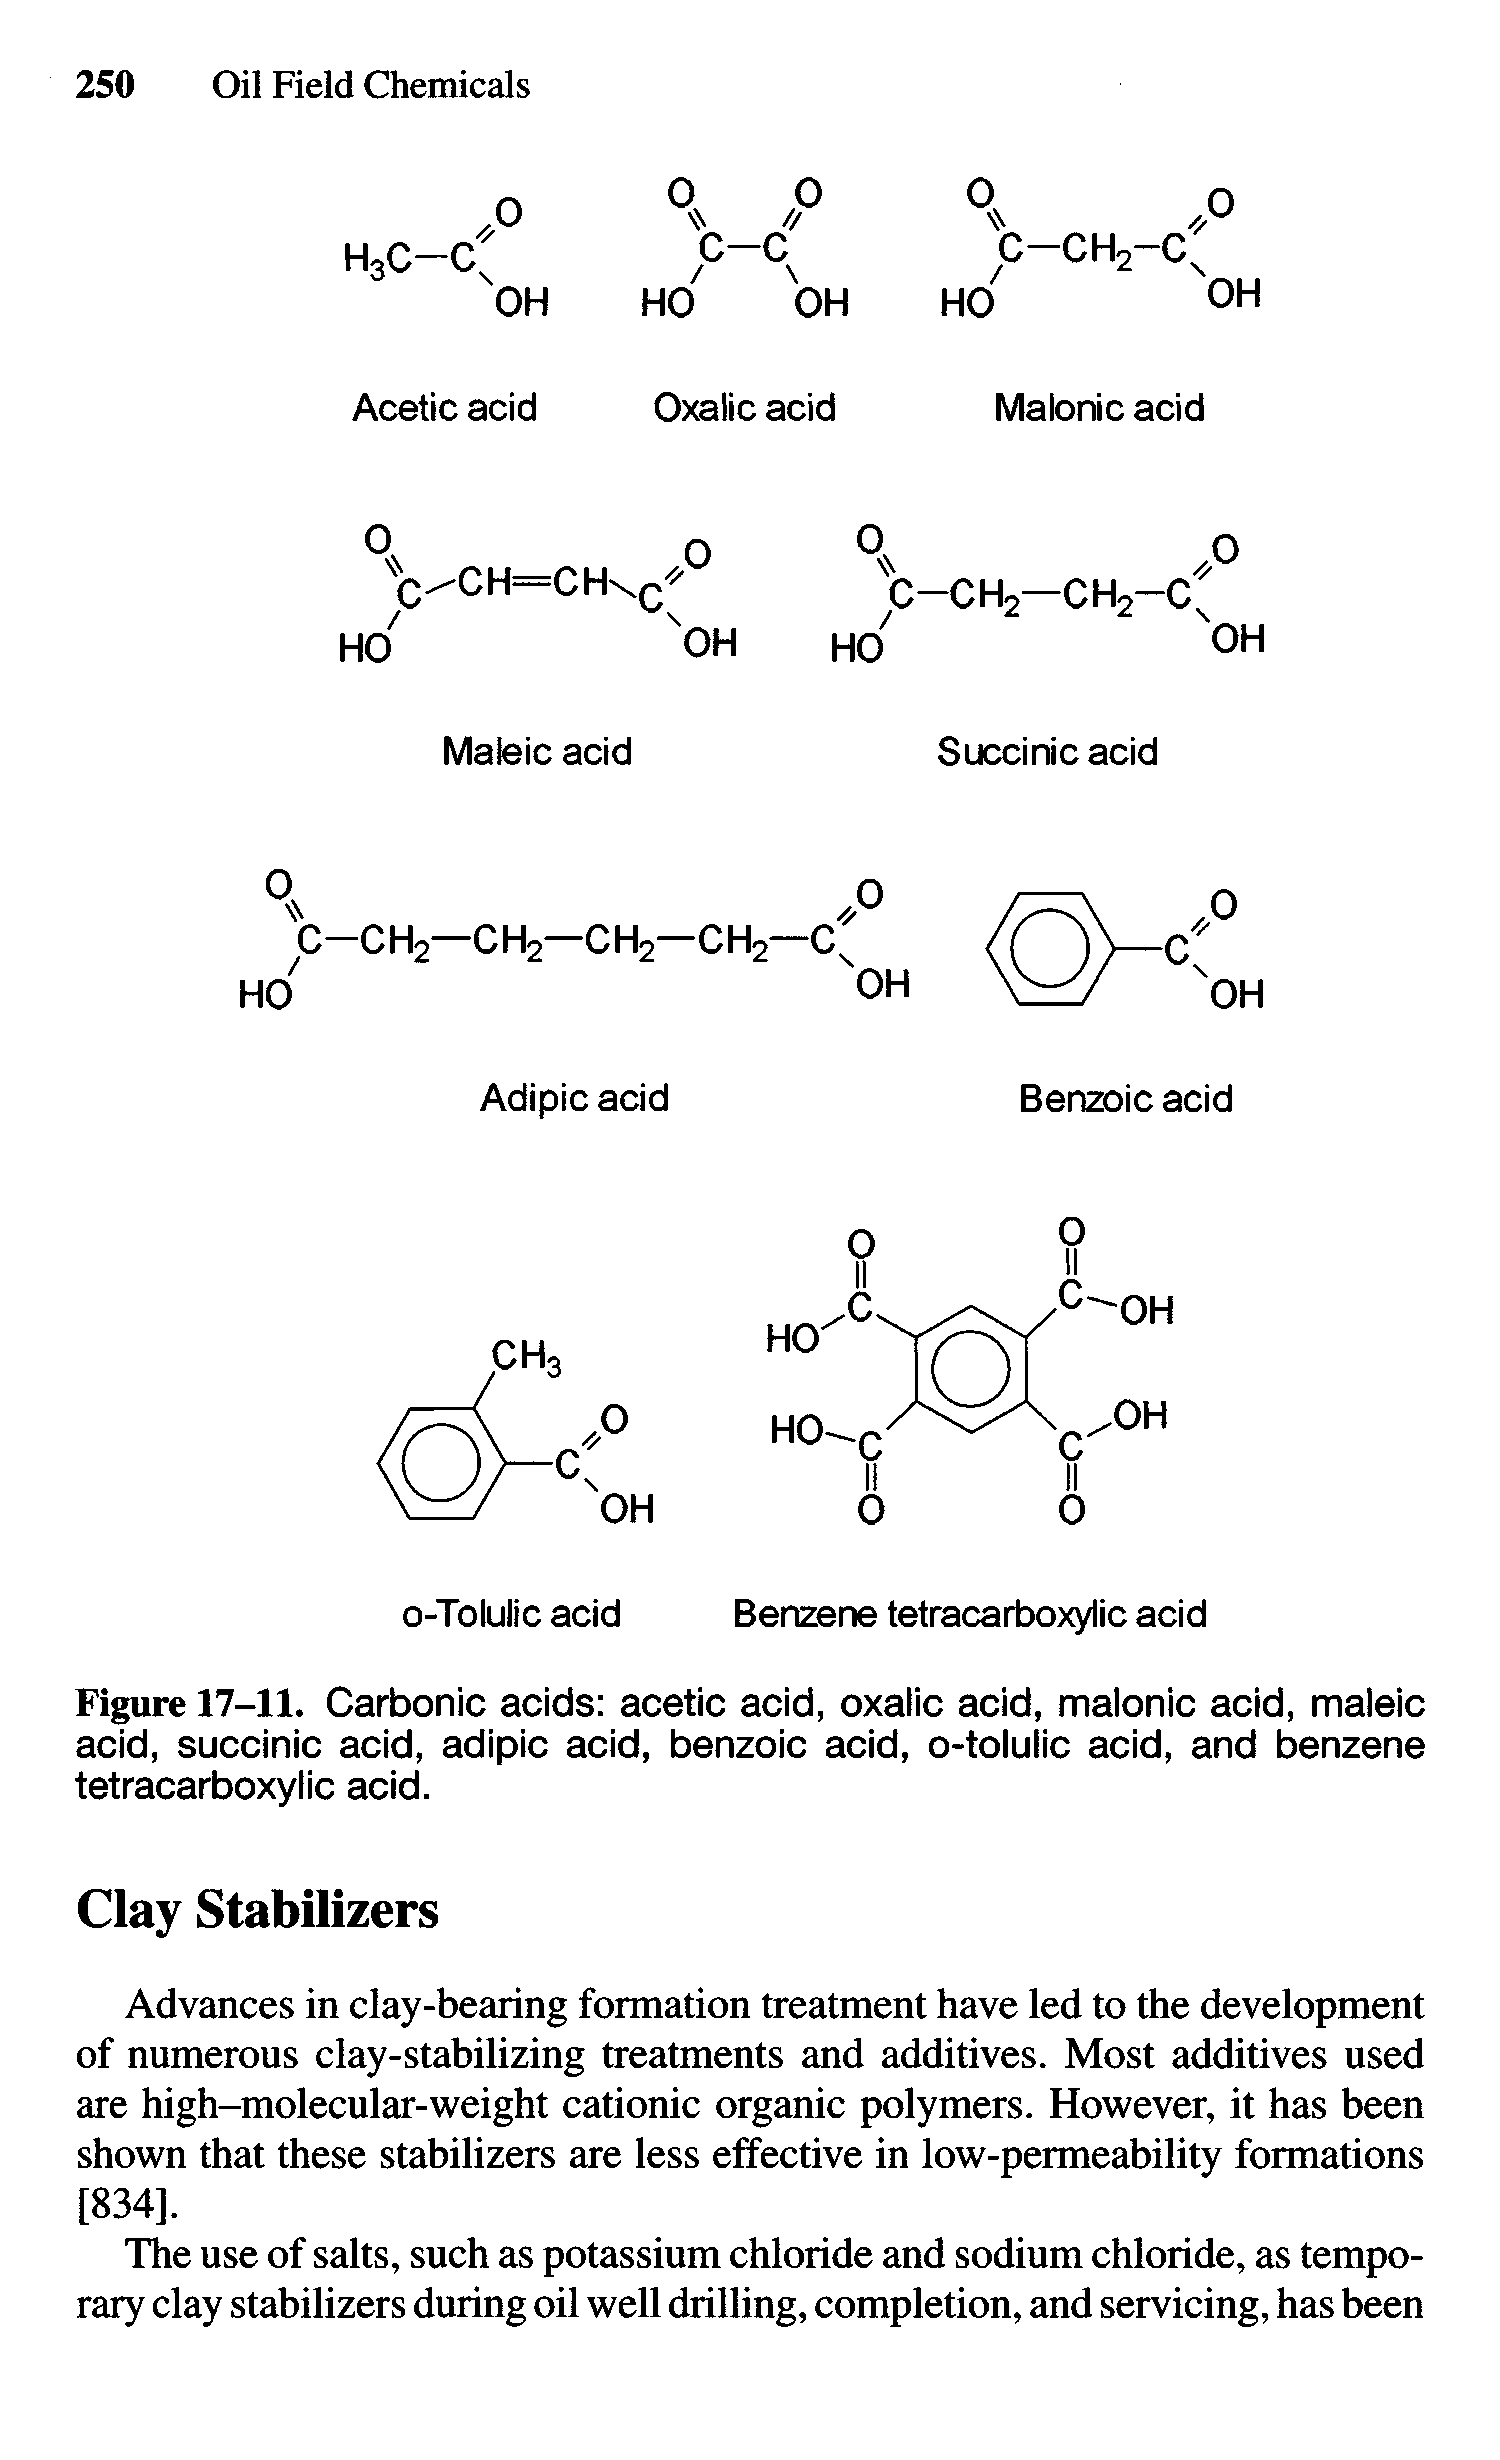 Figure 17-11. Carbonic acids acetic acid, oxalic acid, malonic acid, maleic acid, succinic acid, adipic acid, benzoic acid, o-tolulic acid, and benzene tetracarboxylic acid.